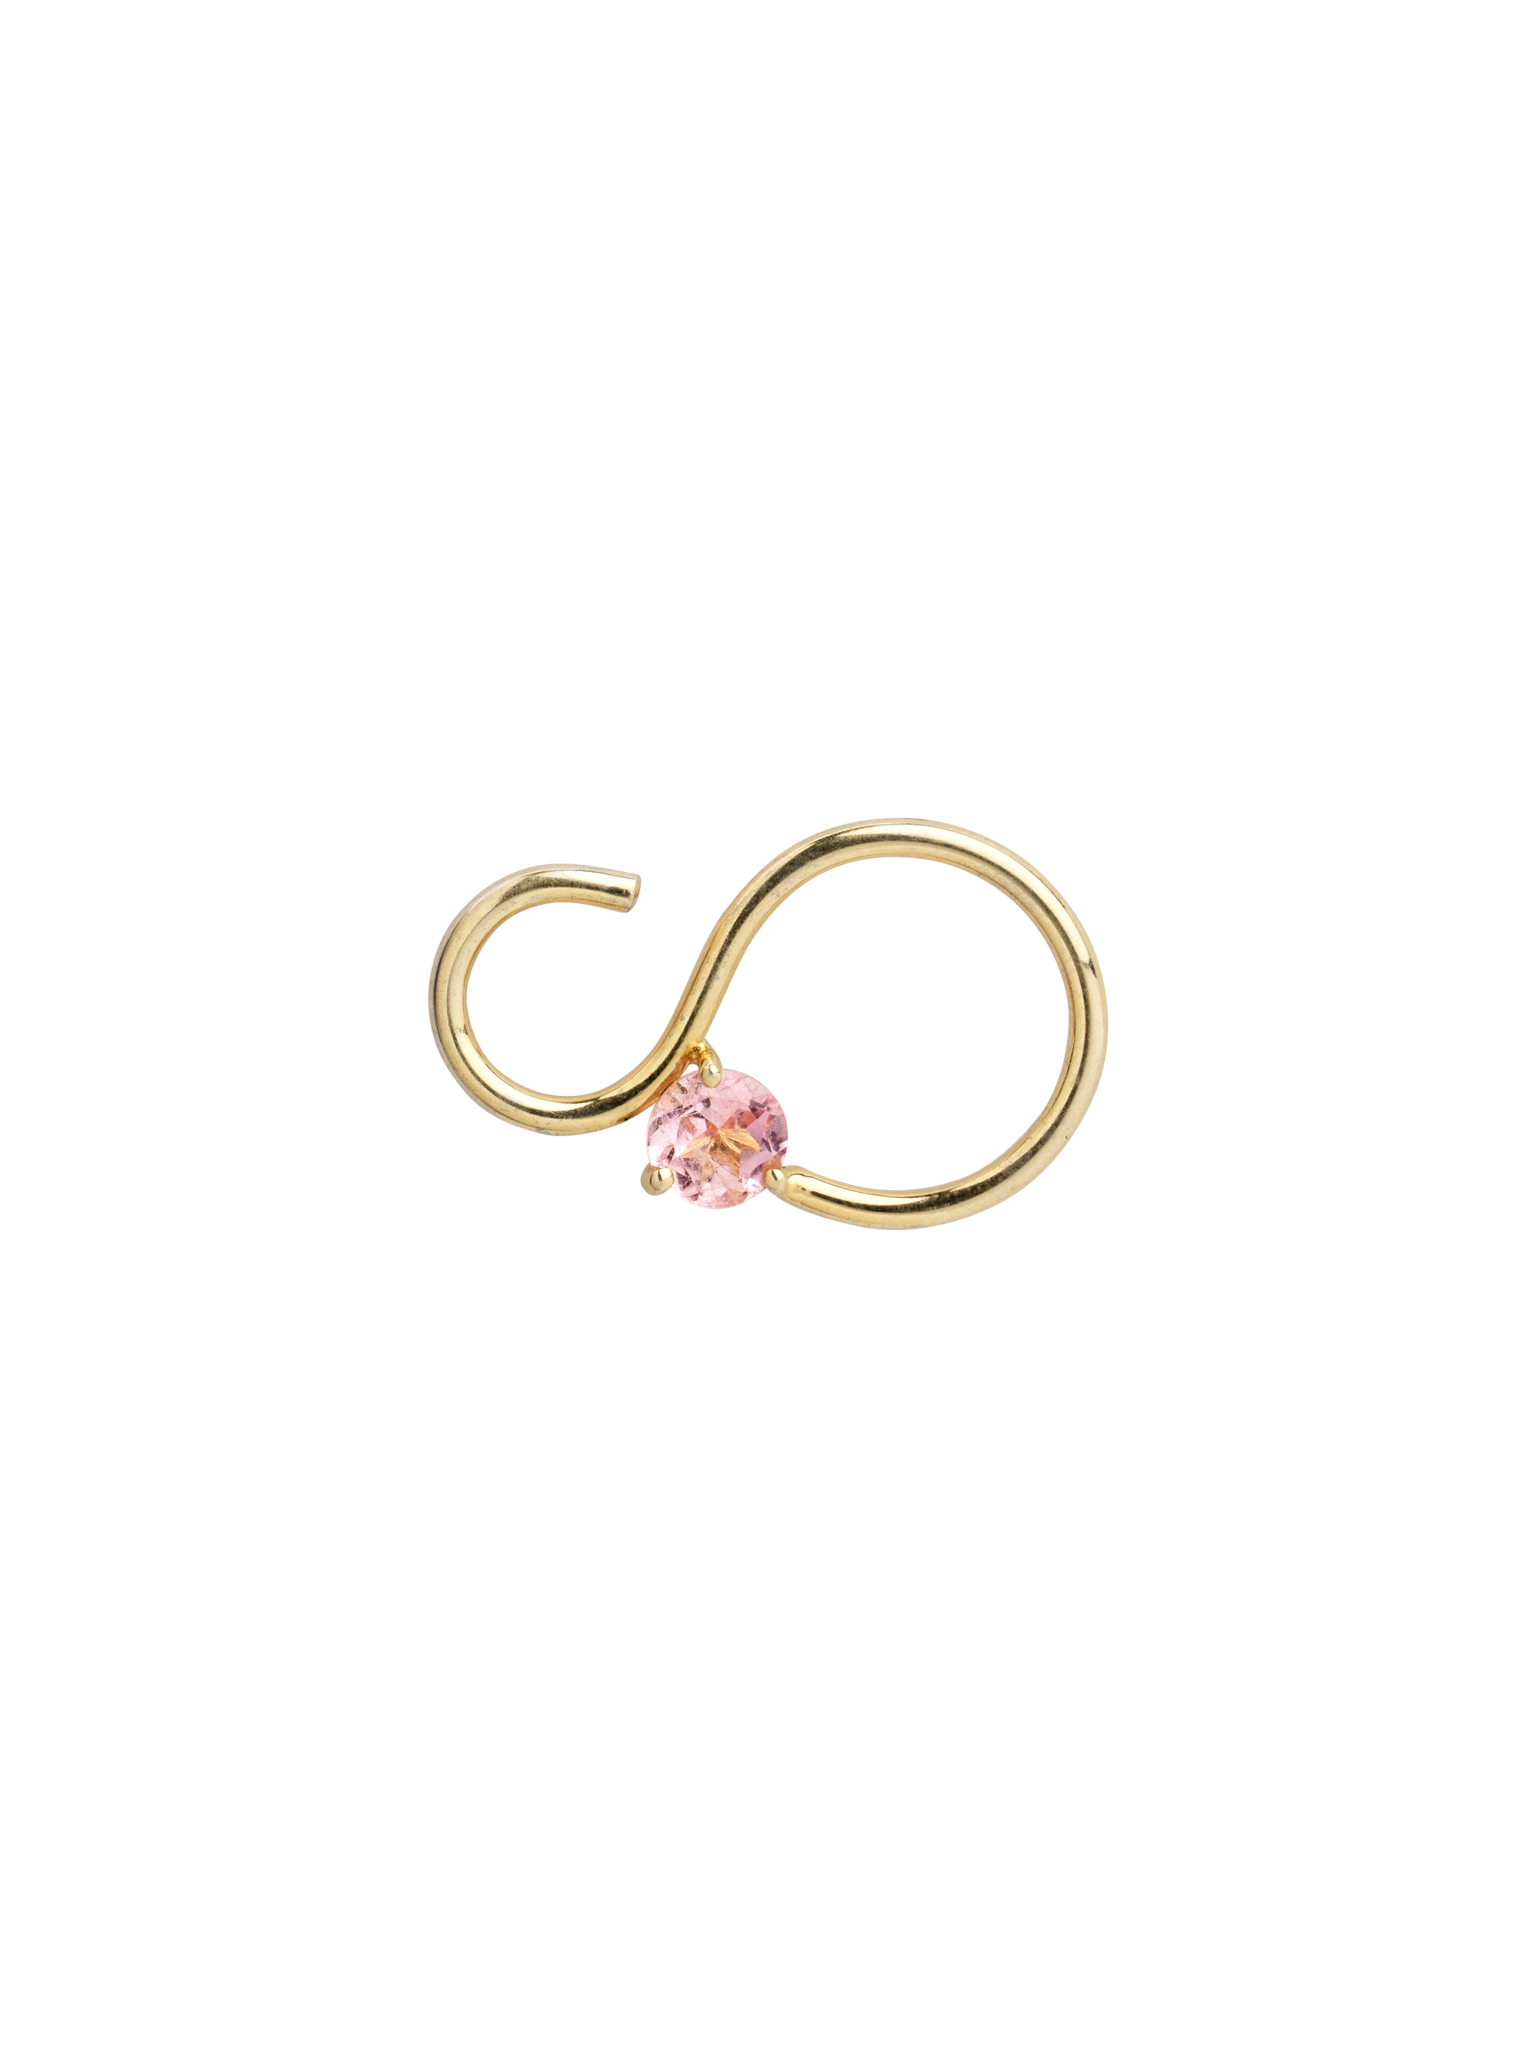 Petite signature pink tourmaline earrings